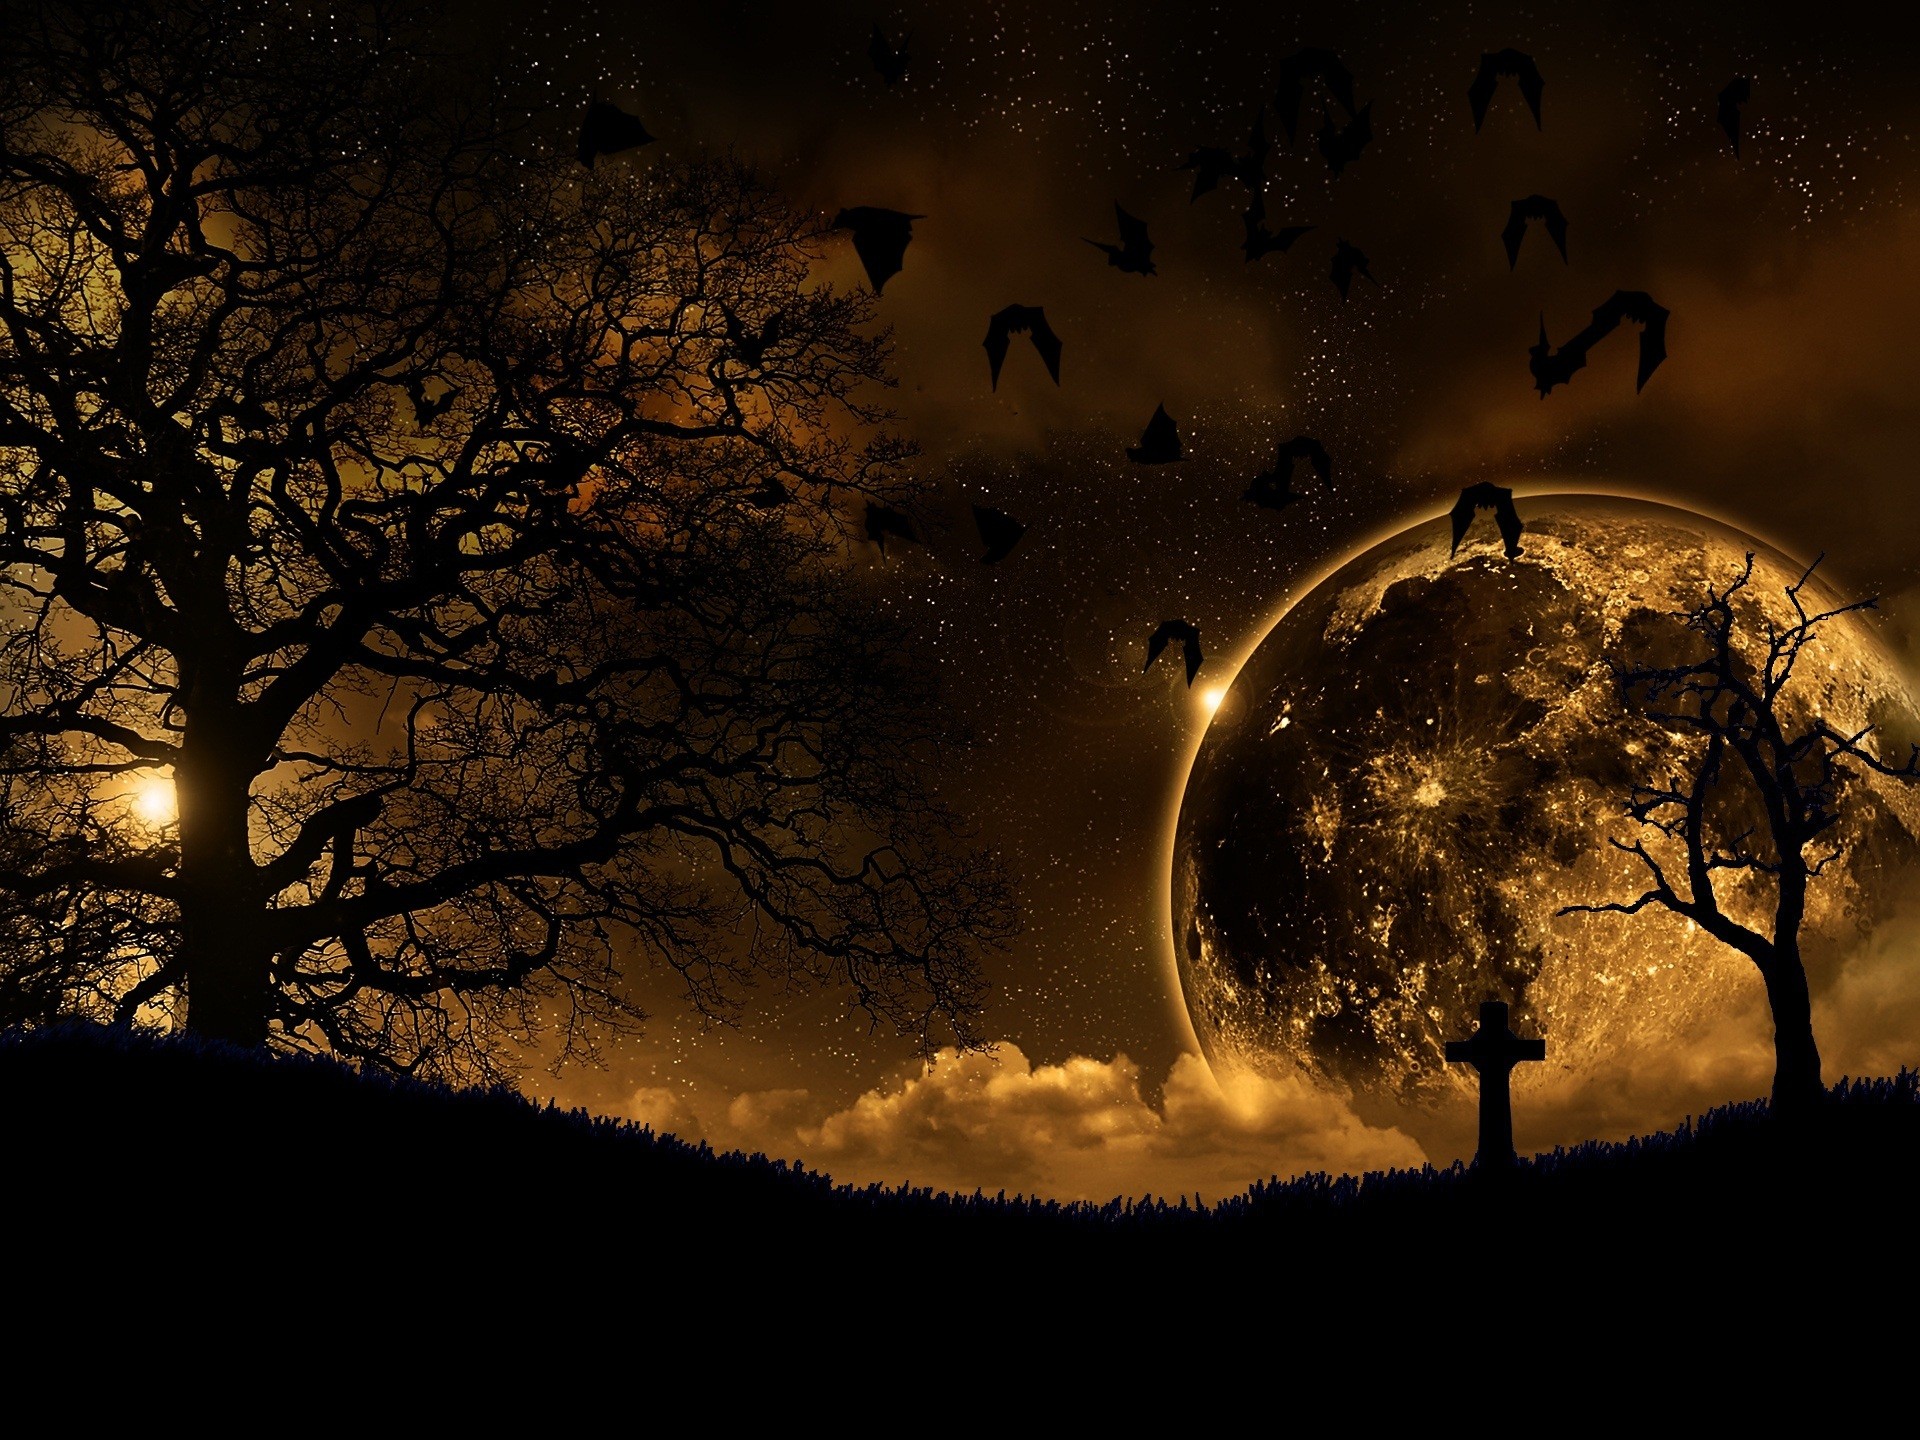 Abstract Night Moon Graveyards Bats Wallpaper